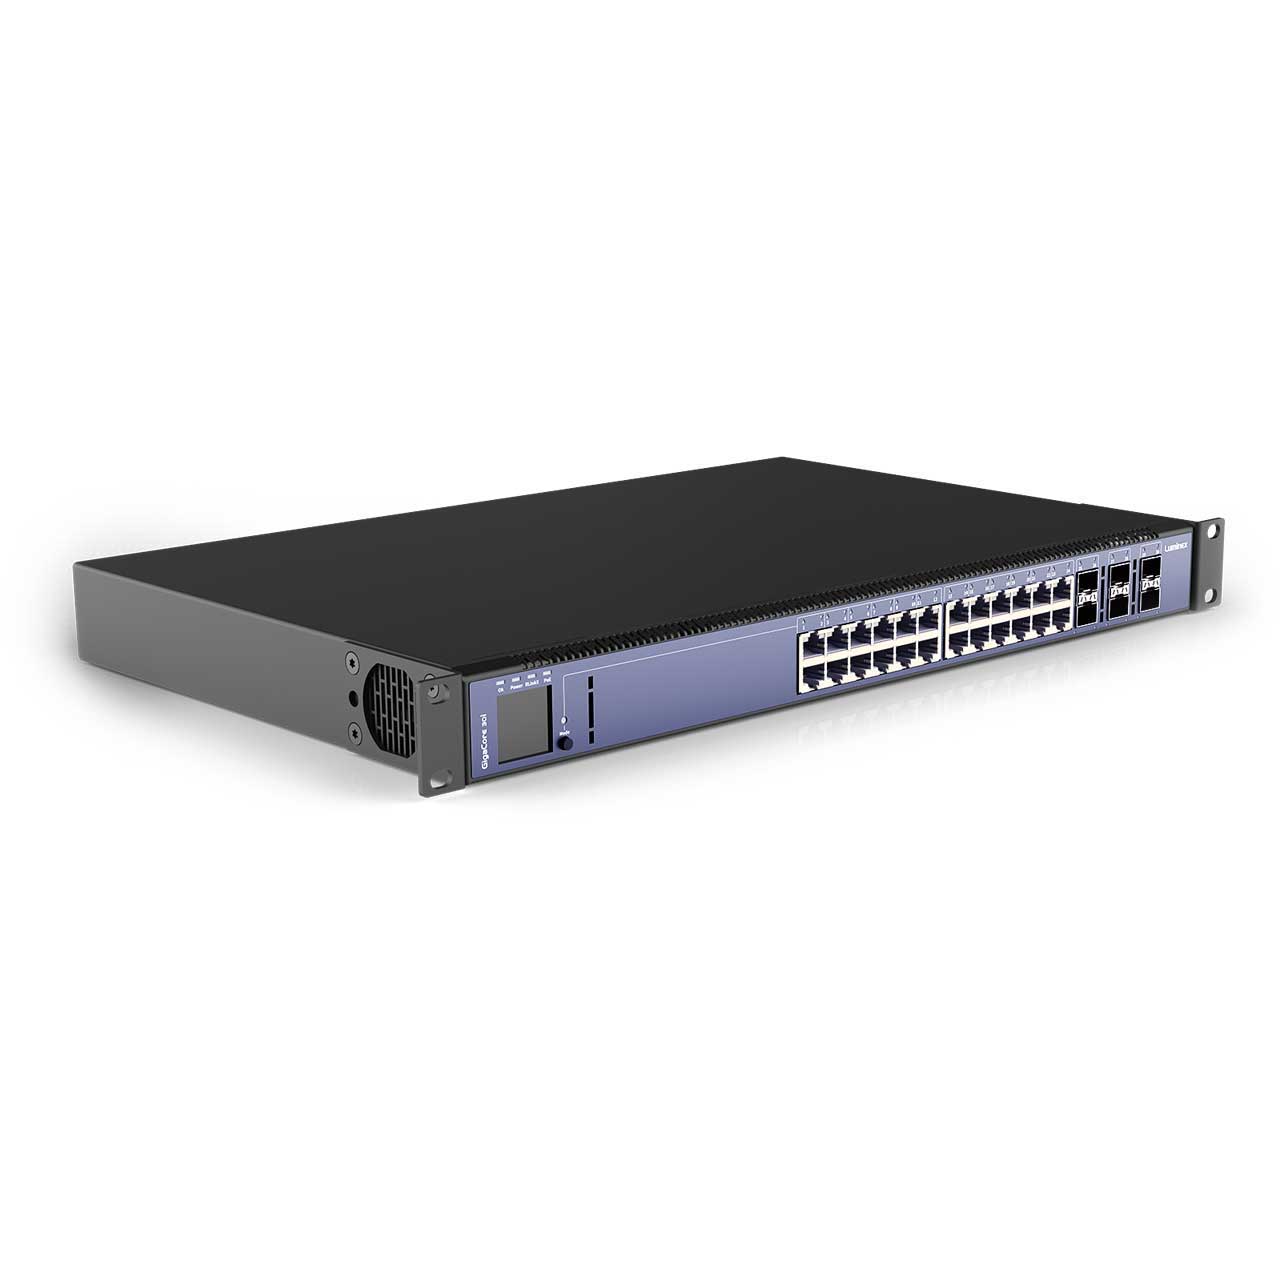 Luminex GigaCore 30i 10Gb Ethernet AV Network Switch with 24x RJ45